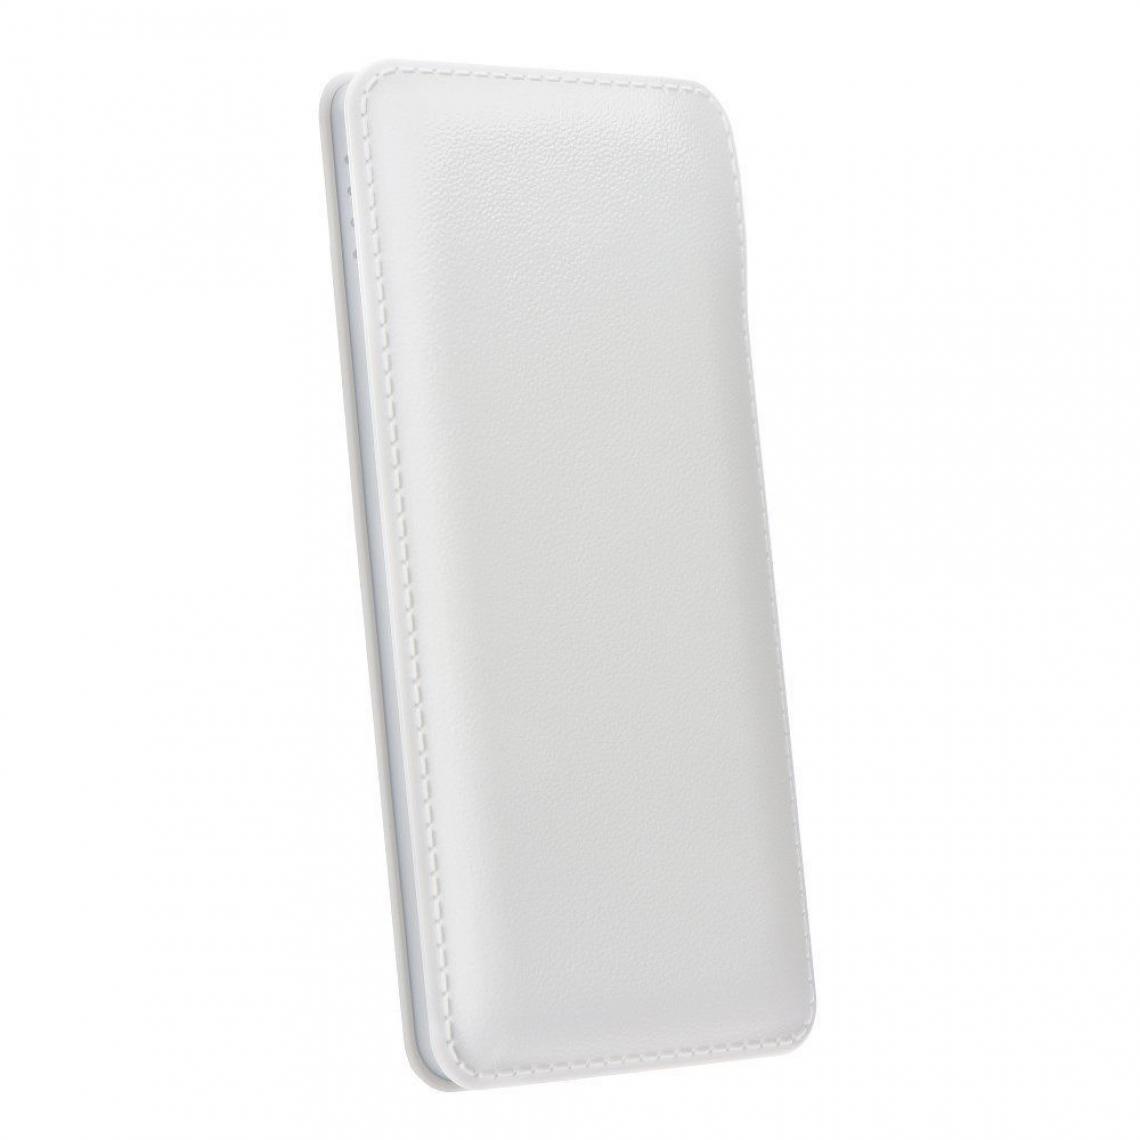 Ozzzo - Chargeur batterie externe 30000 mAh powerbank ozzzo blanc pour SAMSUNG N920 Galaxy Note 5 - Autres accessoires smartphone